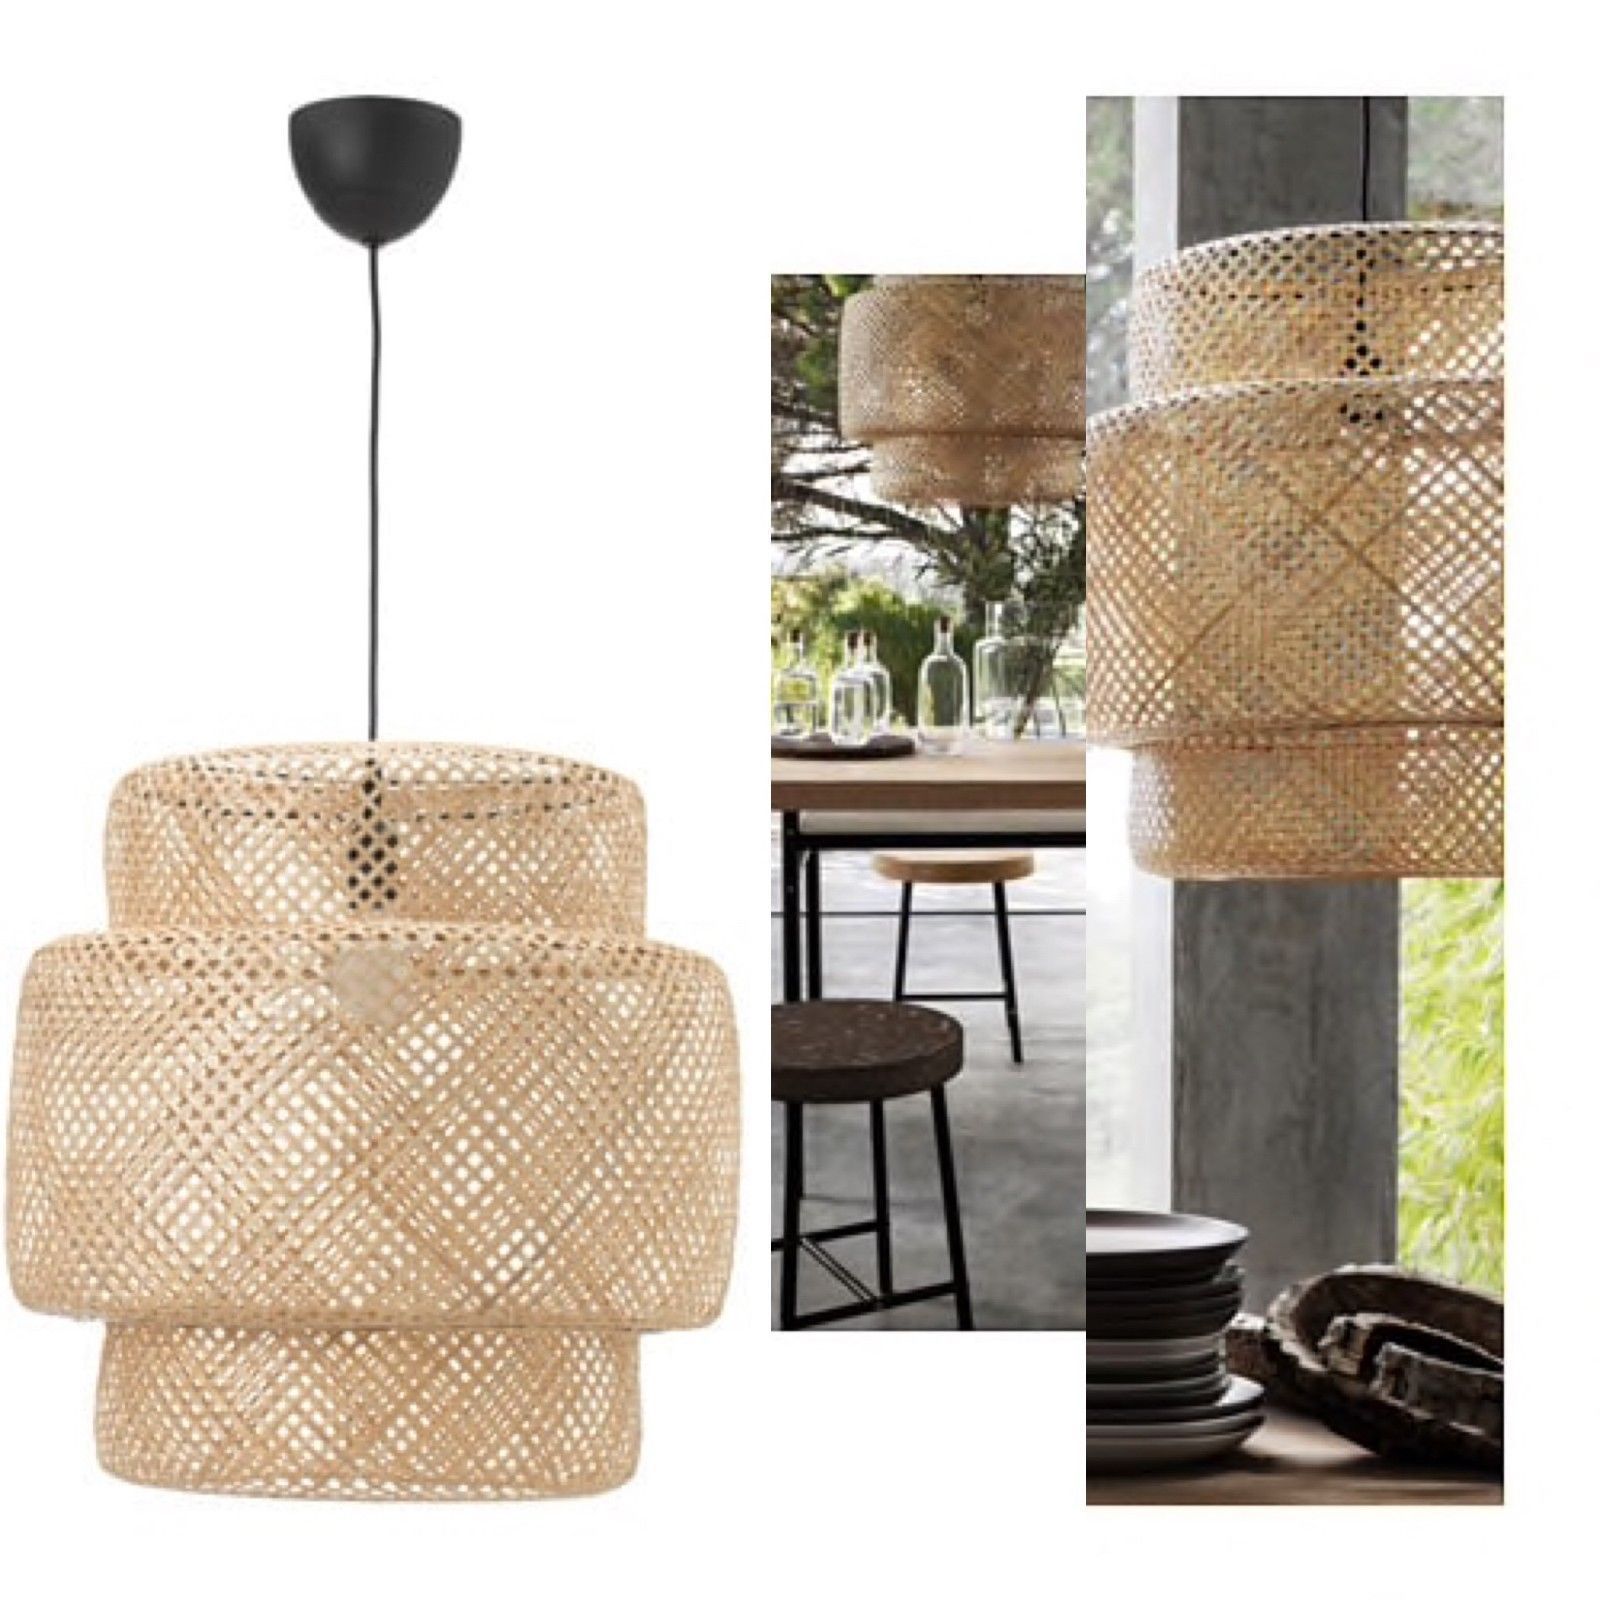 IKEA SINNERLIG Pendant Lamp, Bamboo, 703.150.30 - BRAND NEW IN BOX | Bonanza (Global)